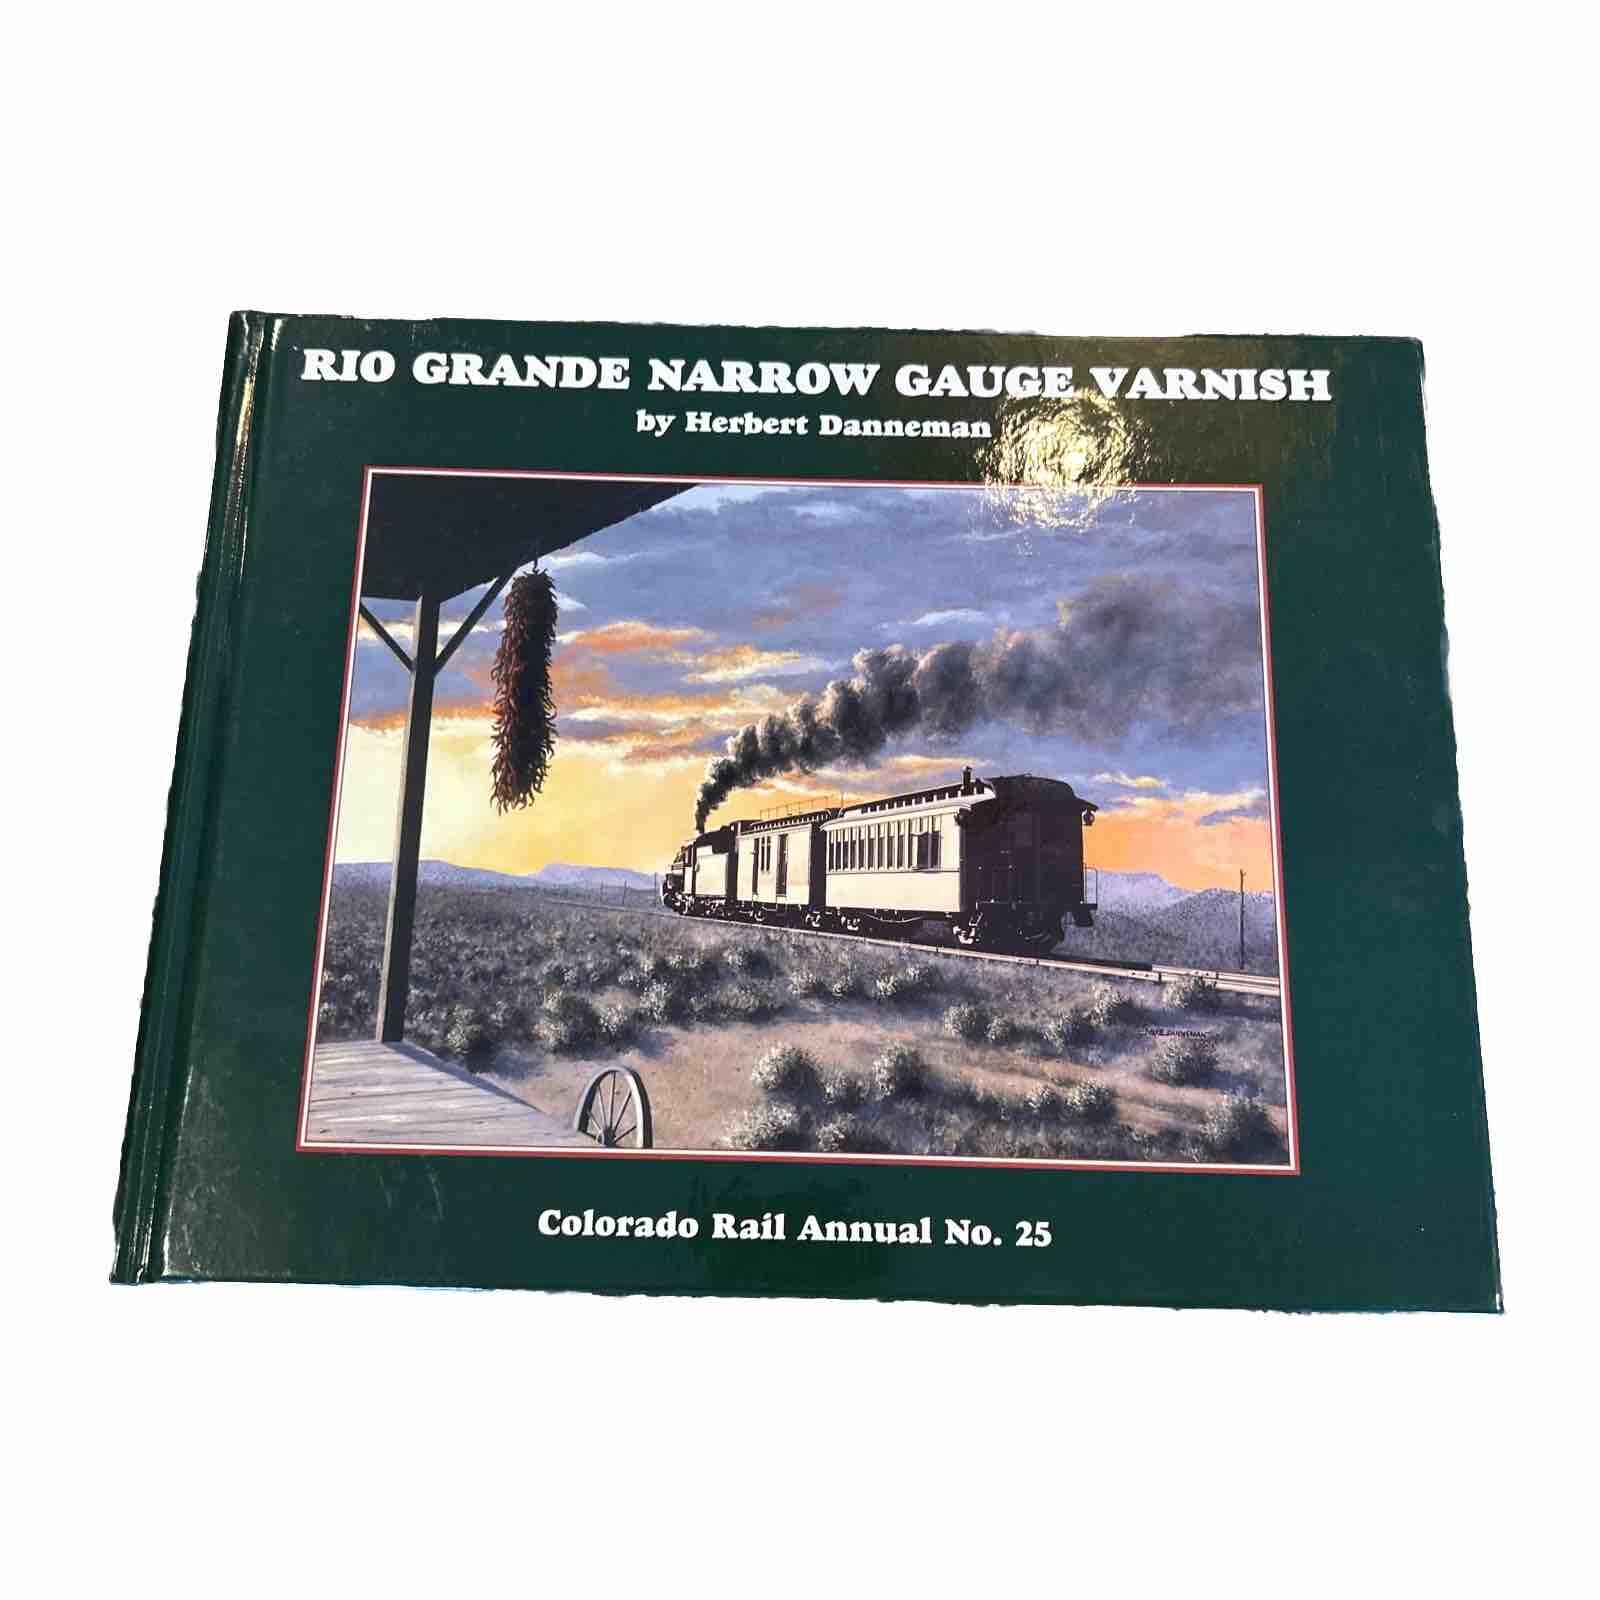 Rio Grande Narrow Gauge Varnish By Herbert Danneman - CO Rail Annual No. 25 - HC